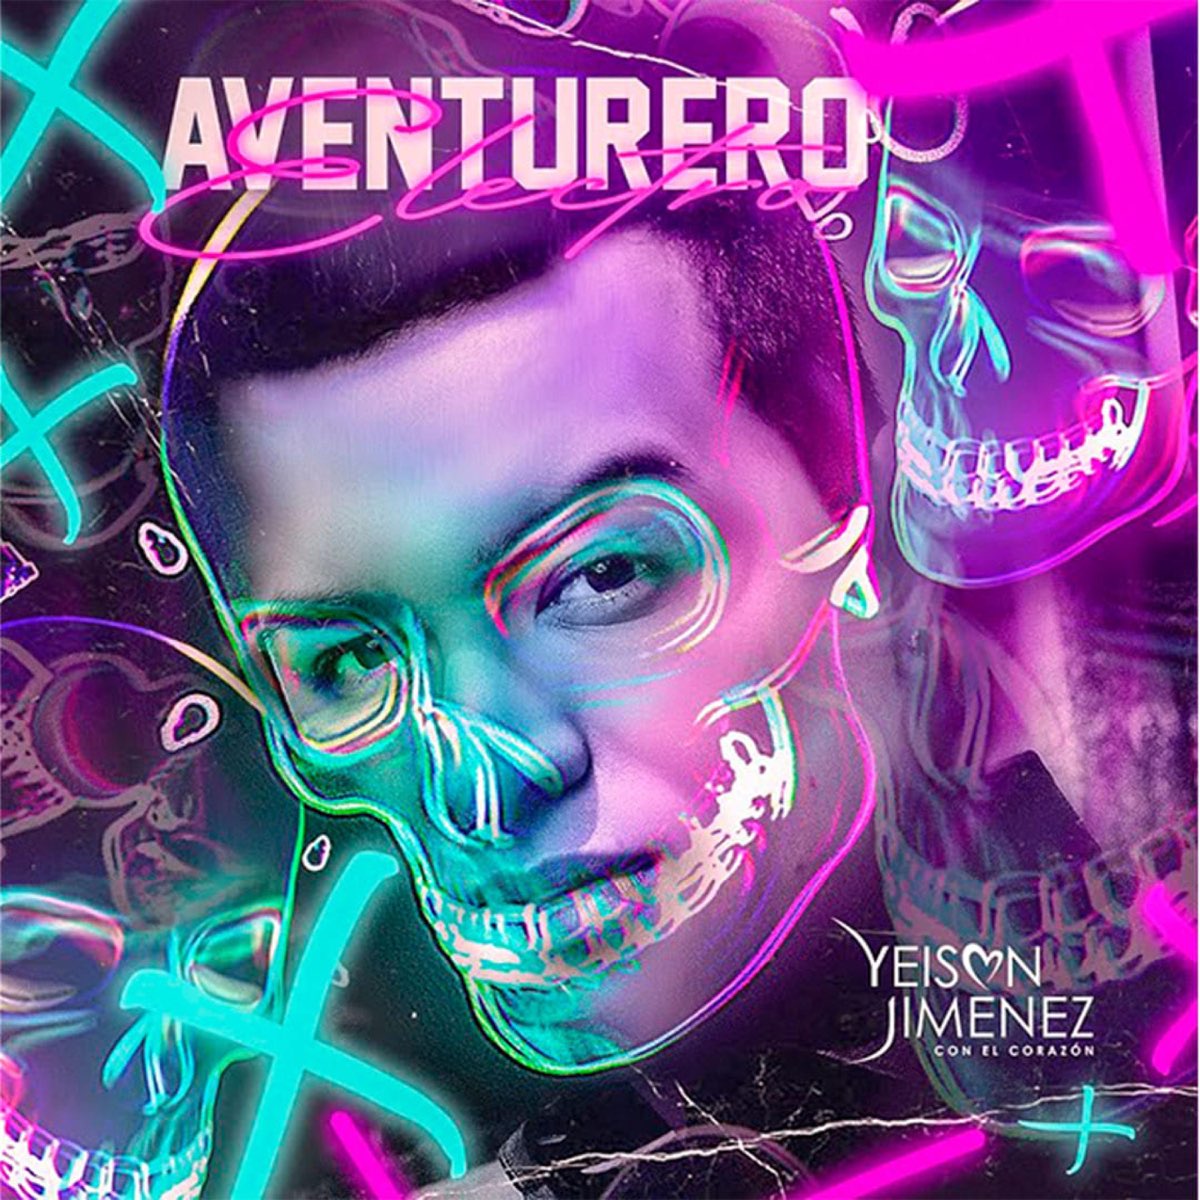 ‎Aventurero - Single - Album by Dj Mario Andretti - Apple Music